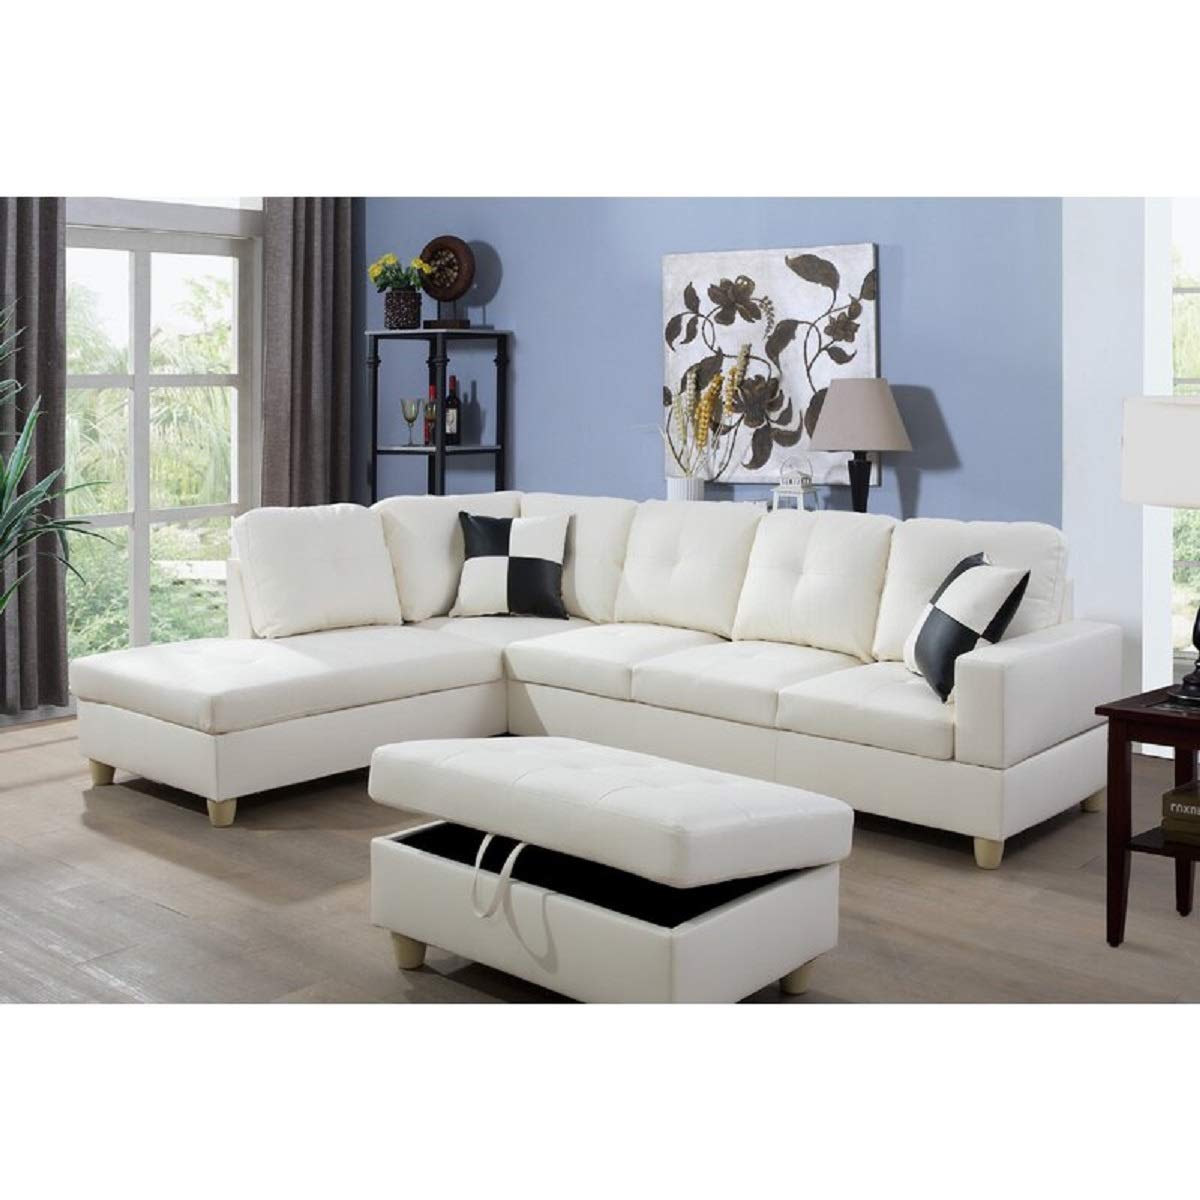 Designer Sofa Set:- Rey L Shape 5 Seater Leatherette Sofa Set Luxury Furniture (Off White)